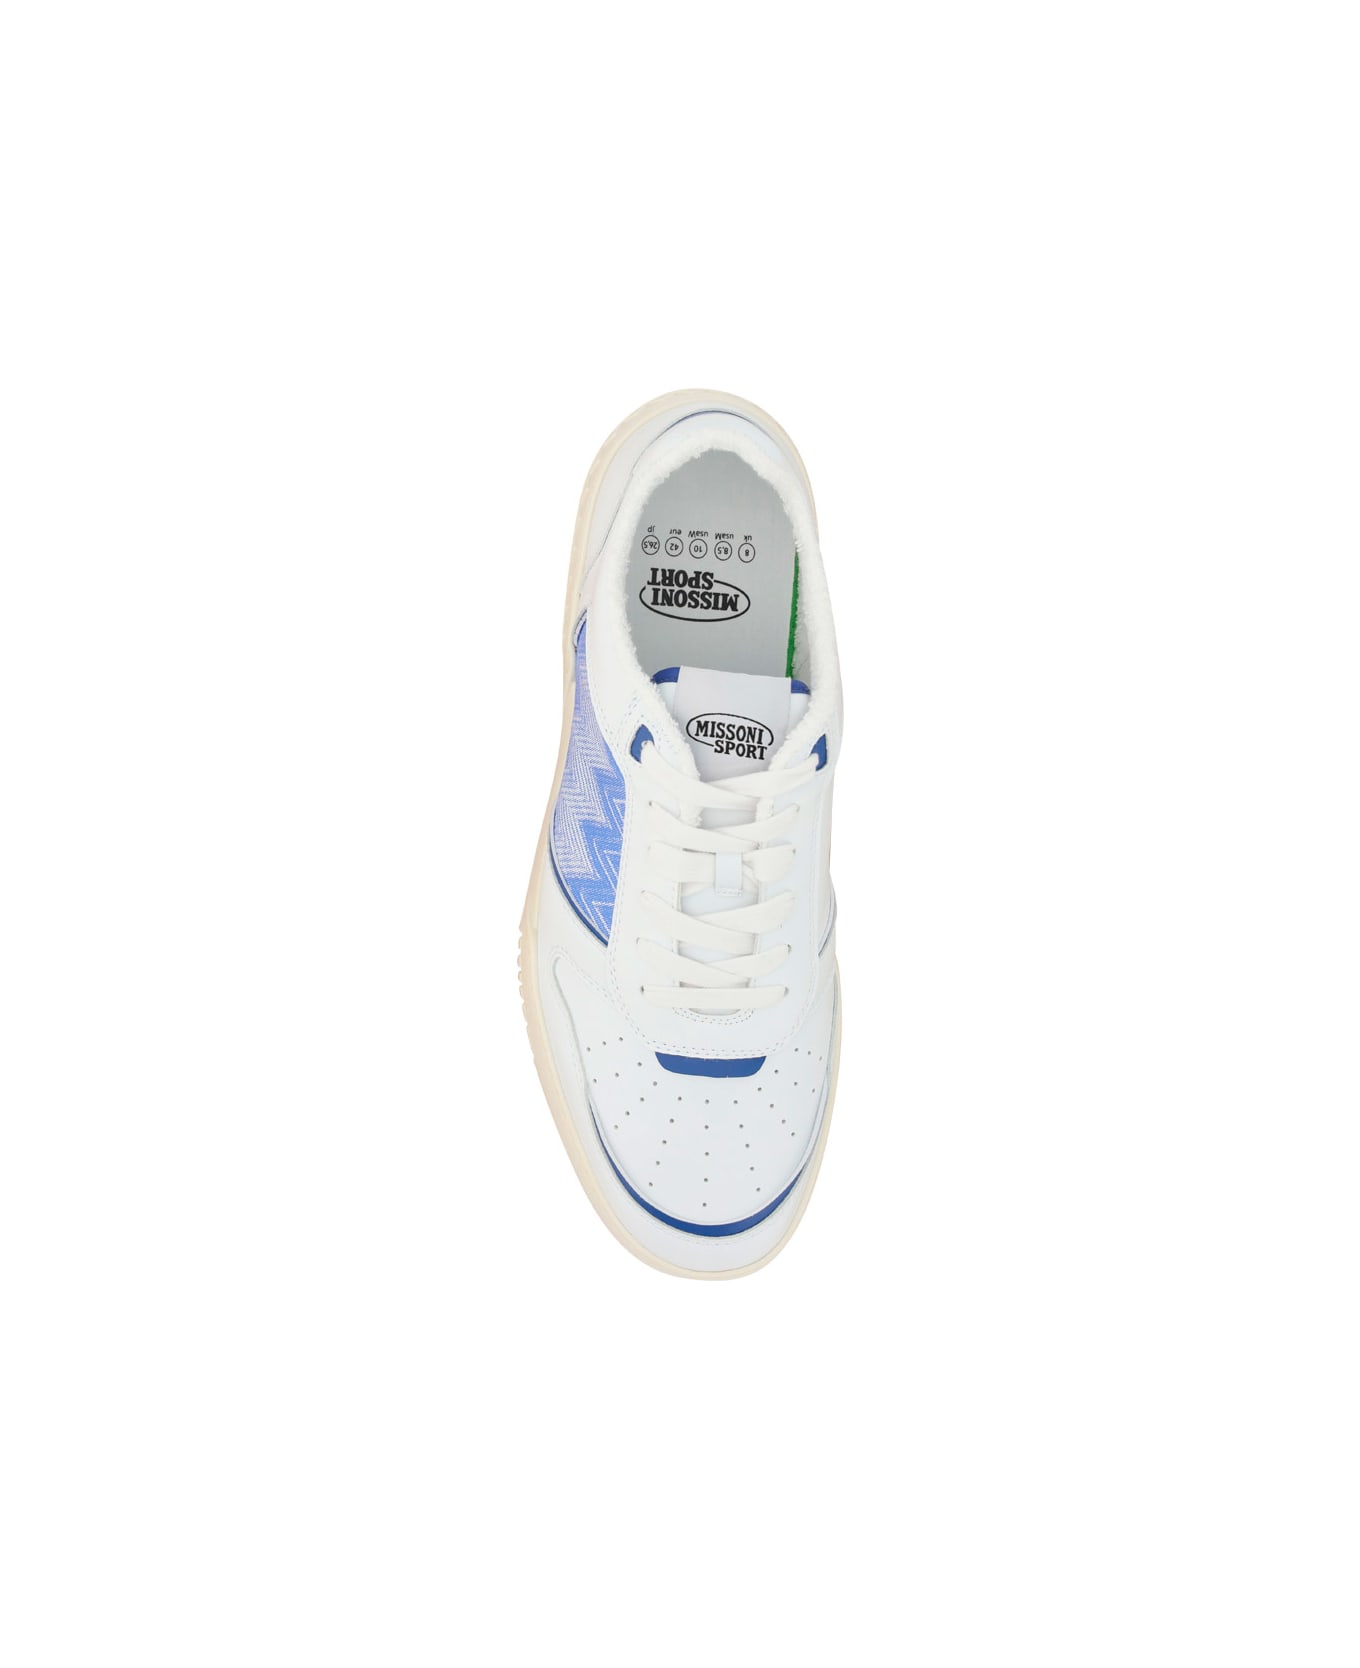 Missoni Acbc X Missoni Sneakers - White